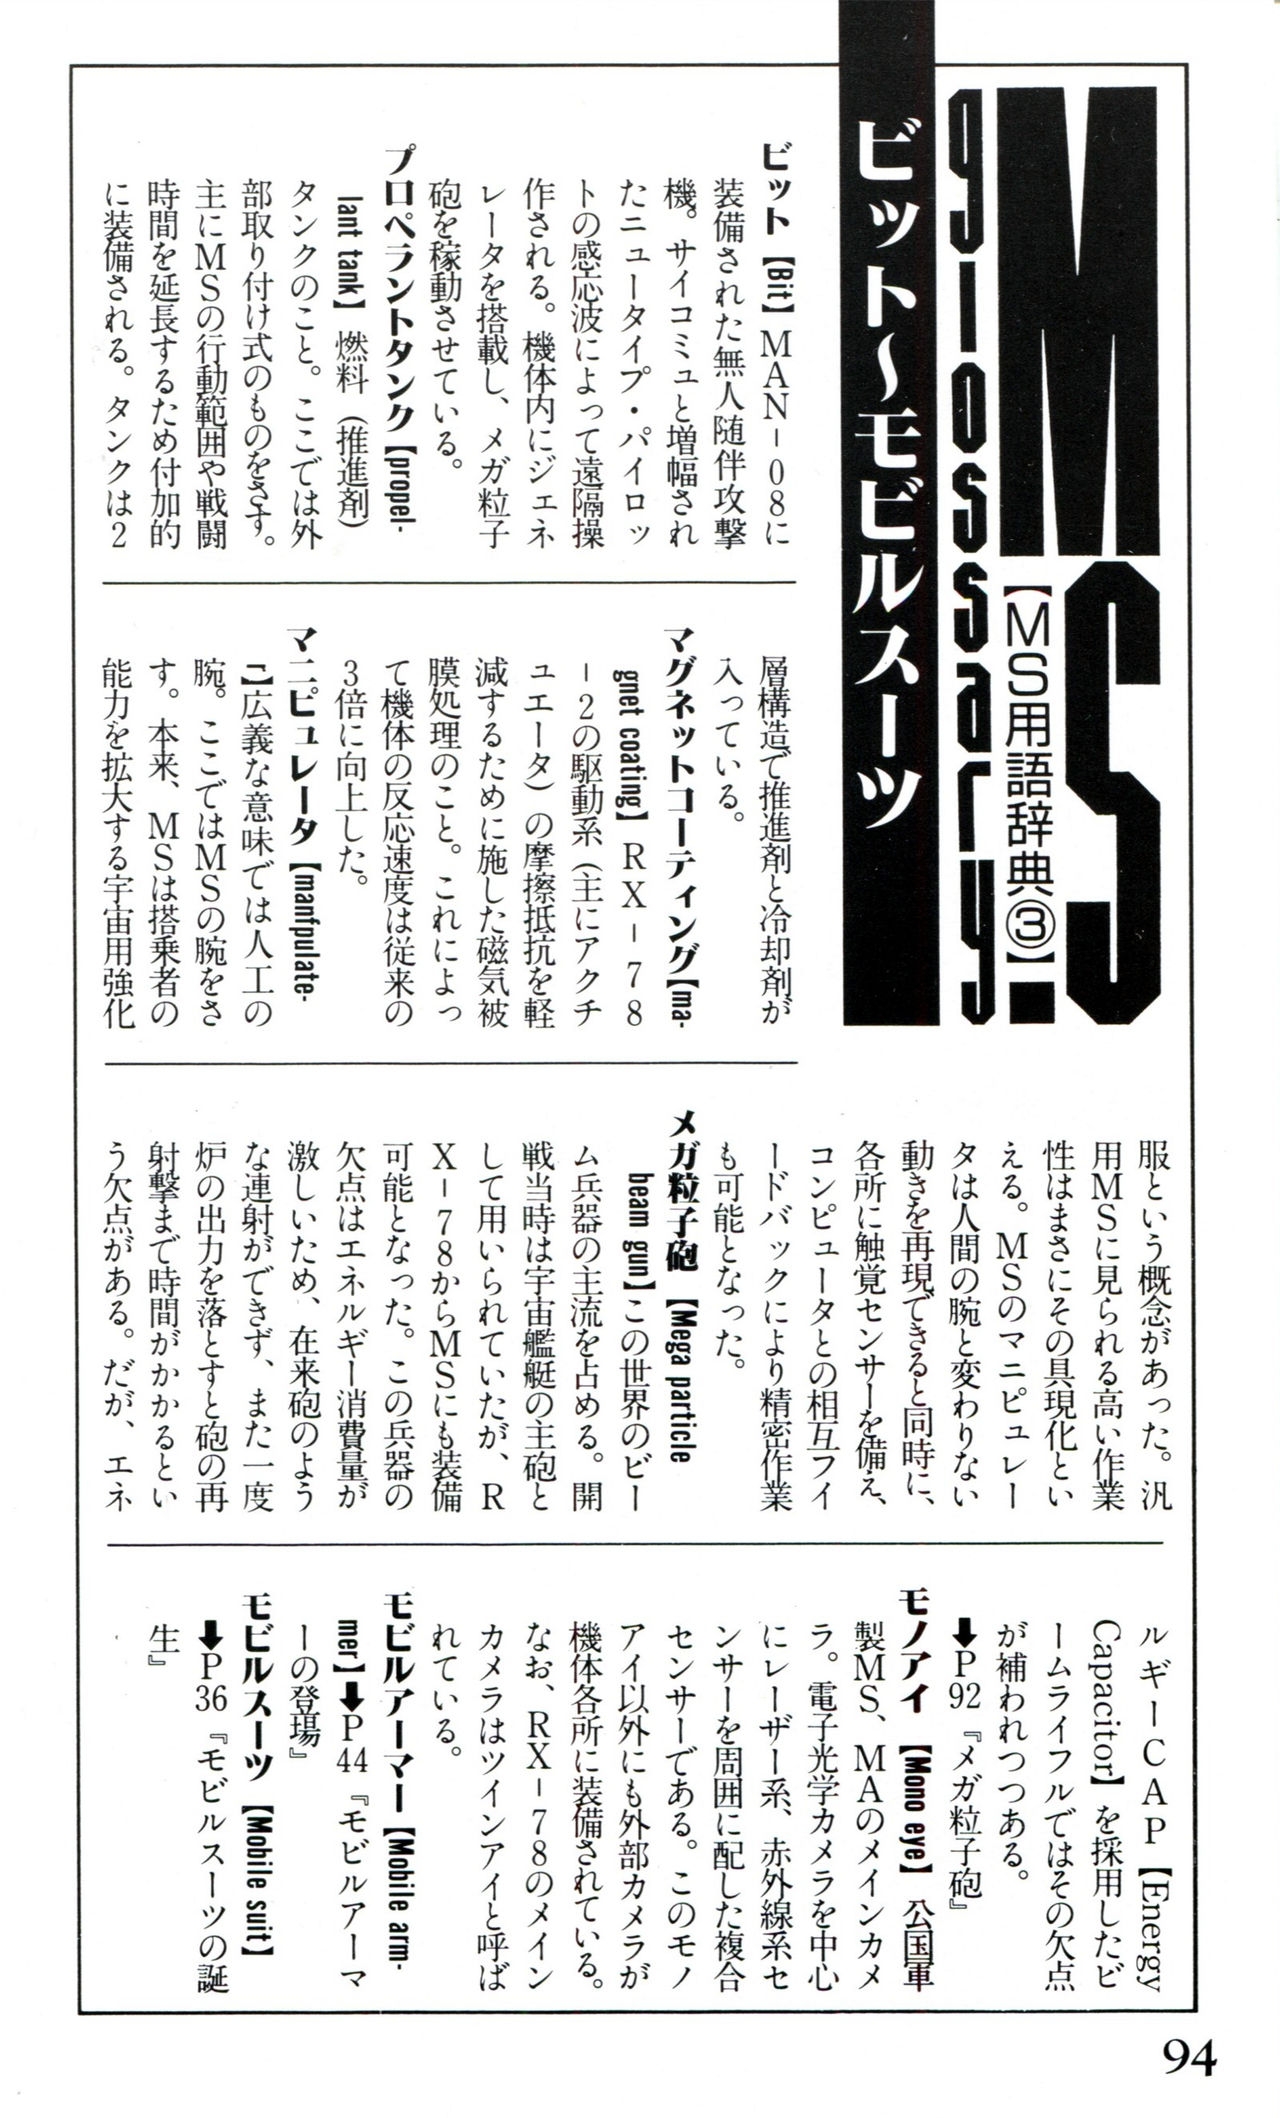 Mobile Suit Gundam U.C. Box MS Gundam Encyclopedia NO.01 - Mobile Suit Gundam 93